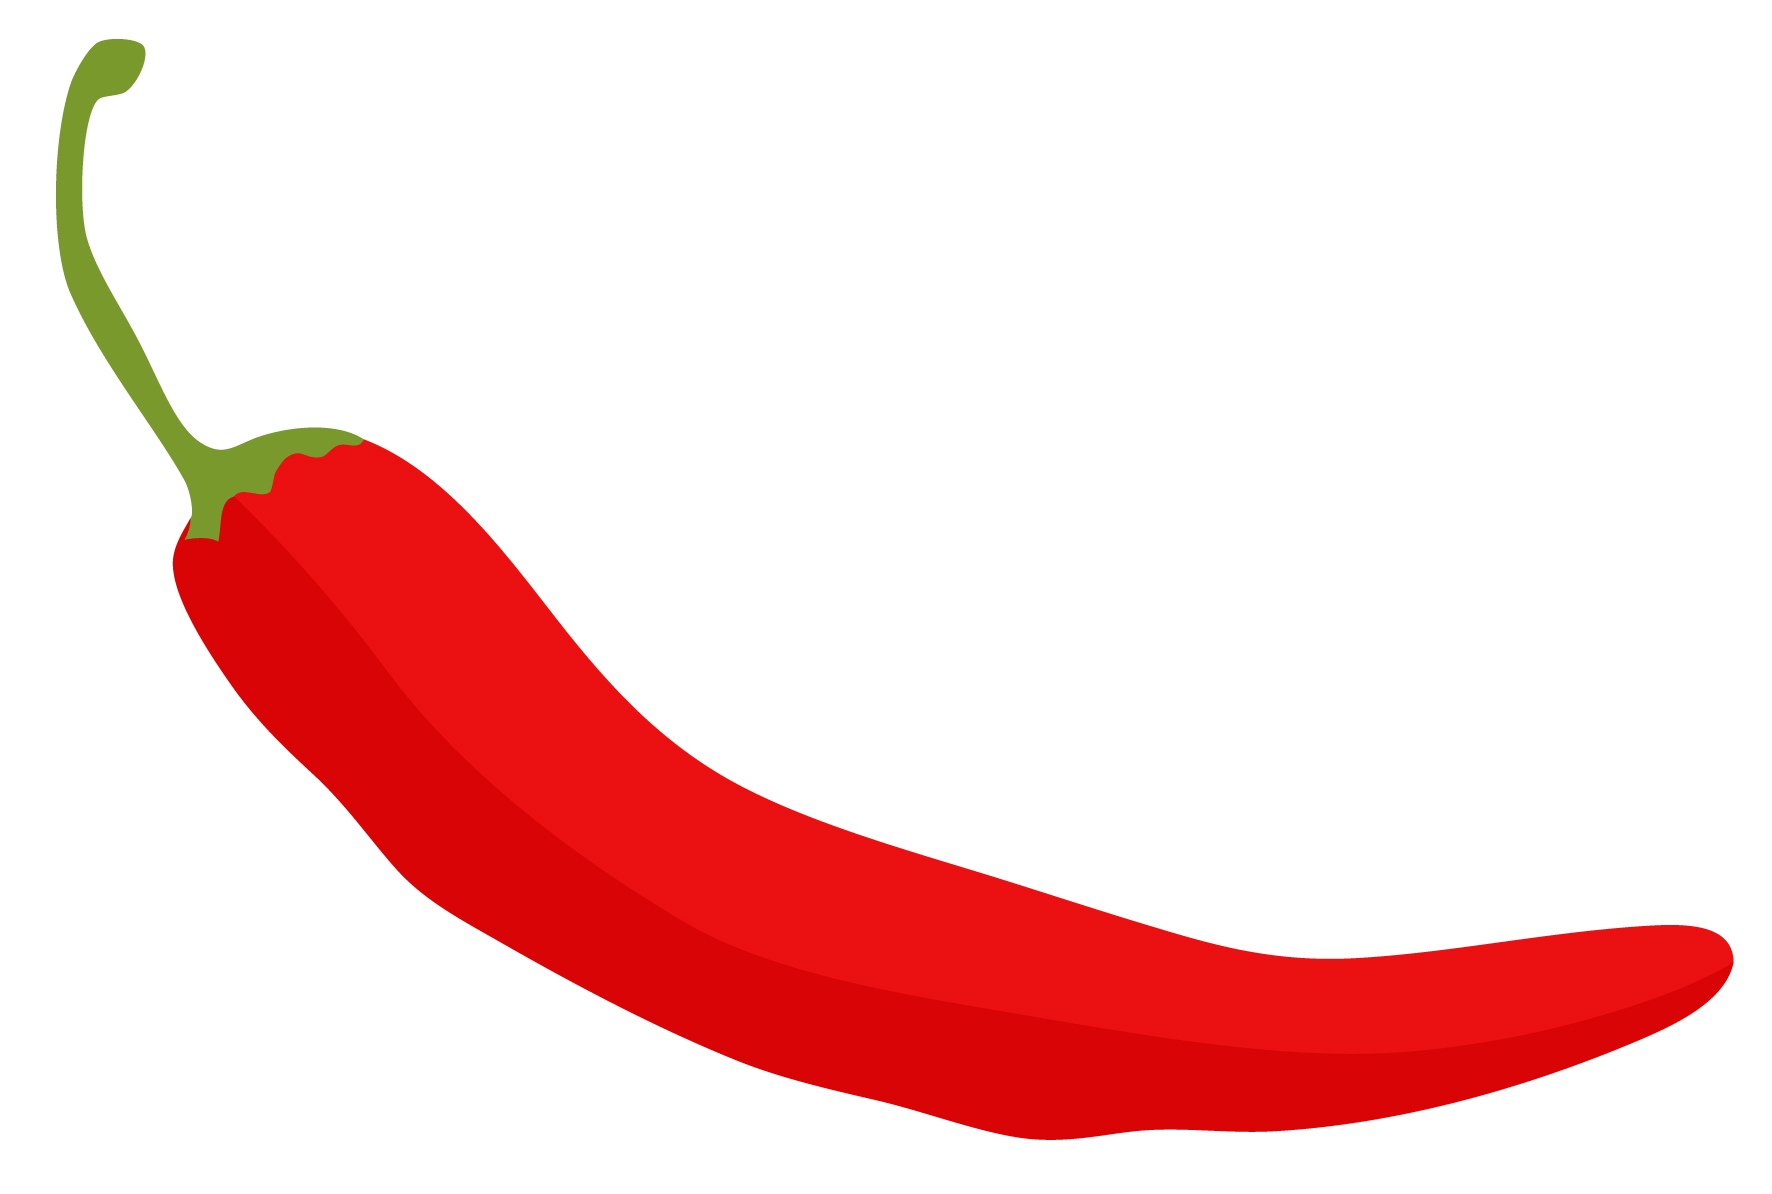 Chili pepper border clipart .